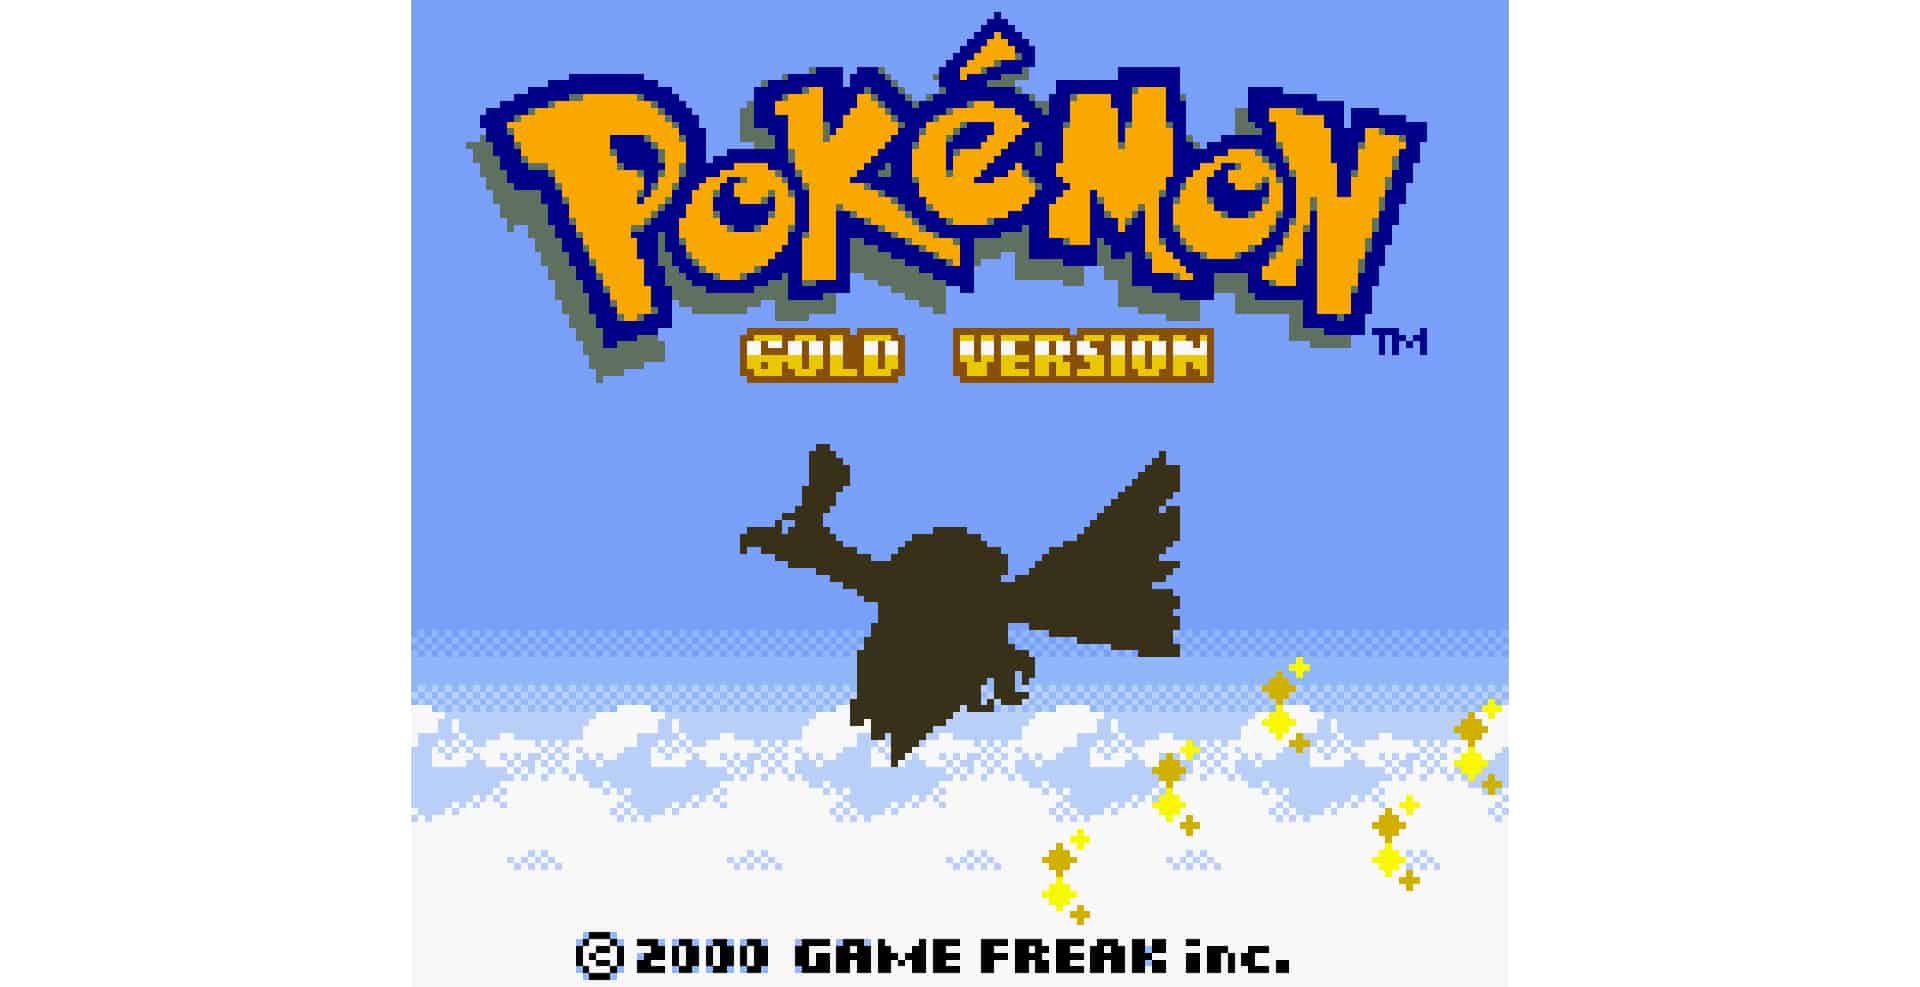 A screenshot from Pokemon Gold.